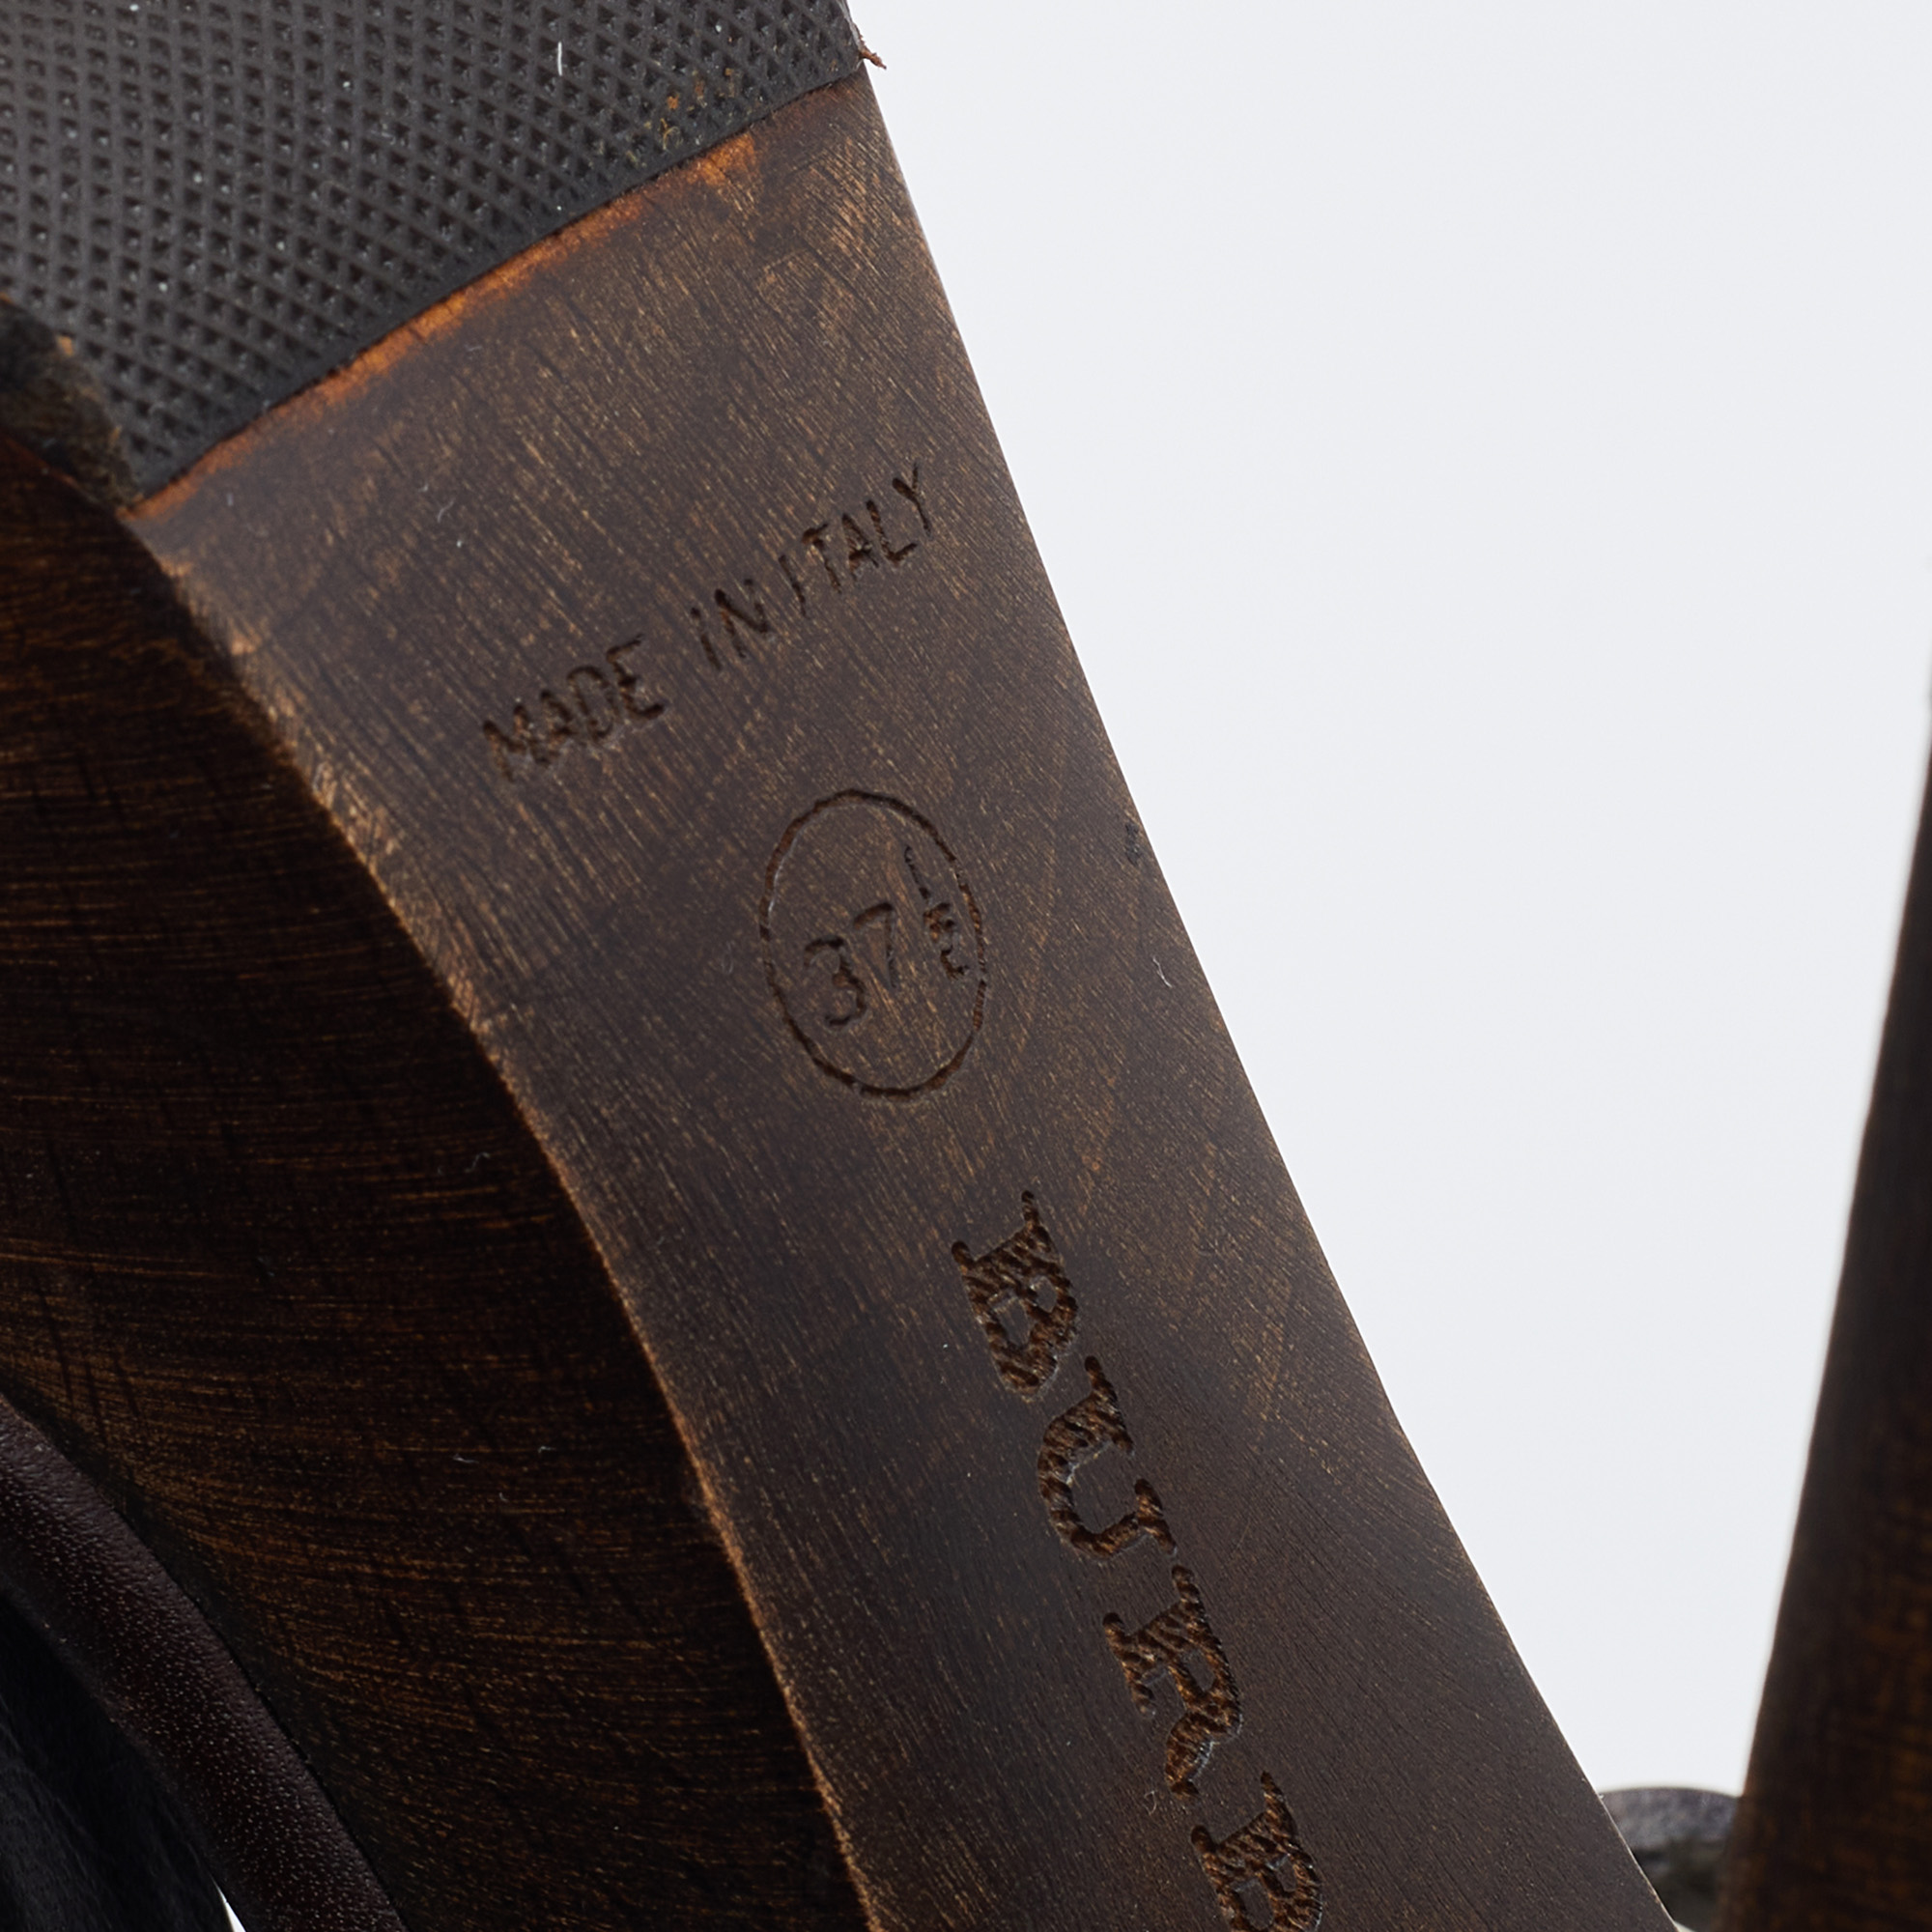 Burberry Dark Brown Leather T-Strap Platform Sandals Size 37.5